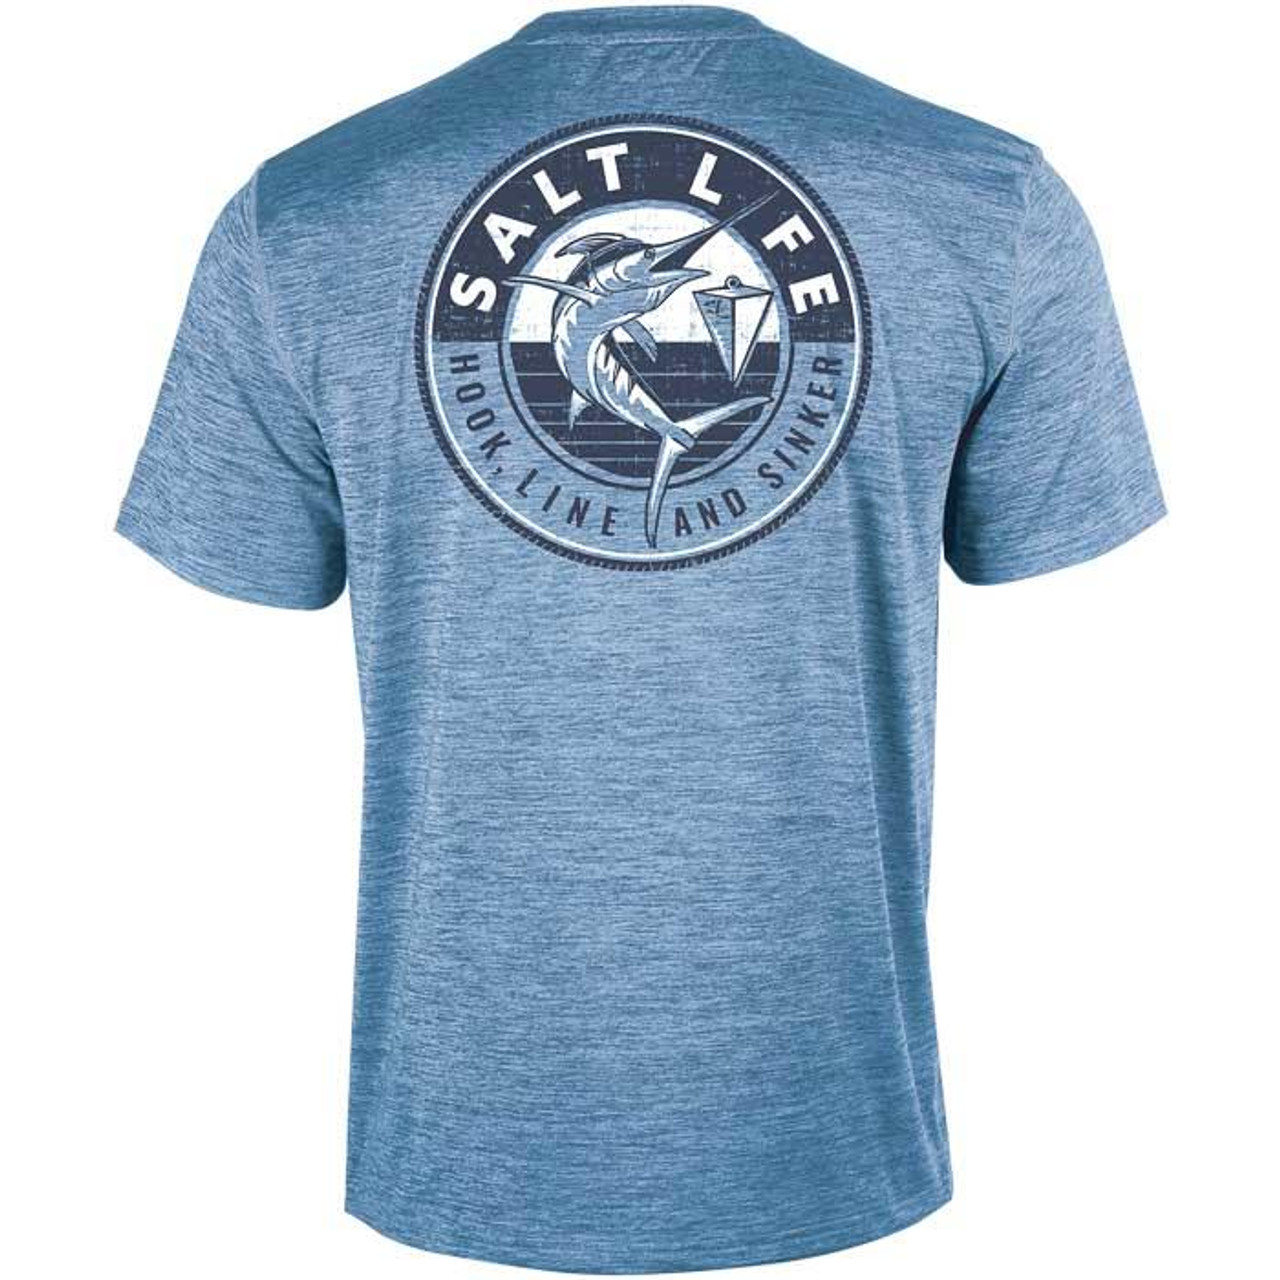 Marlin Sinker Performance Blue SLX T-Shirt